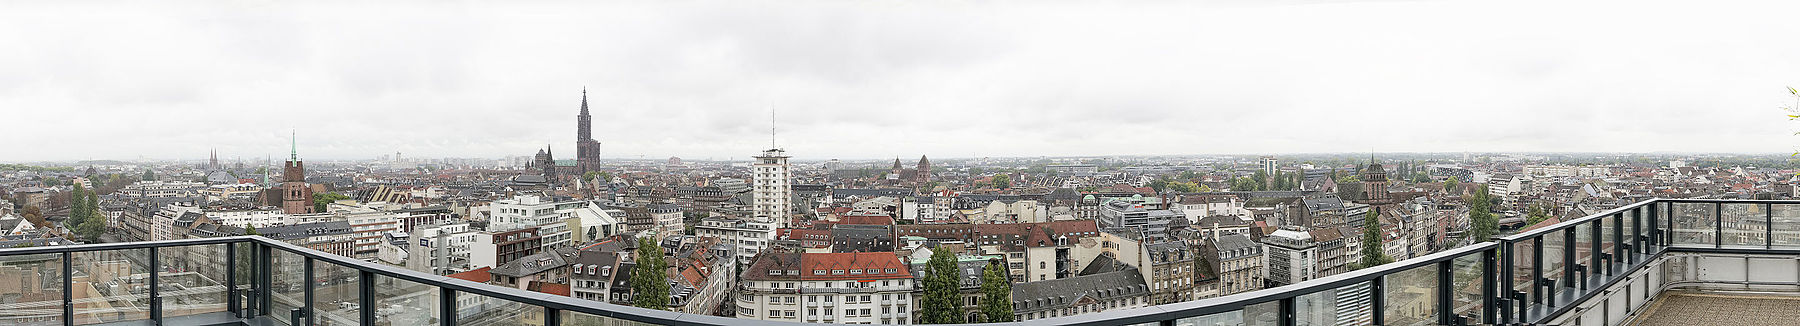 Strasbourg seen from Esca Tower in 2014.jpg